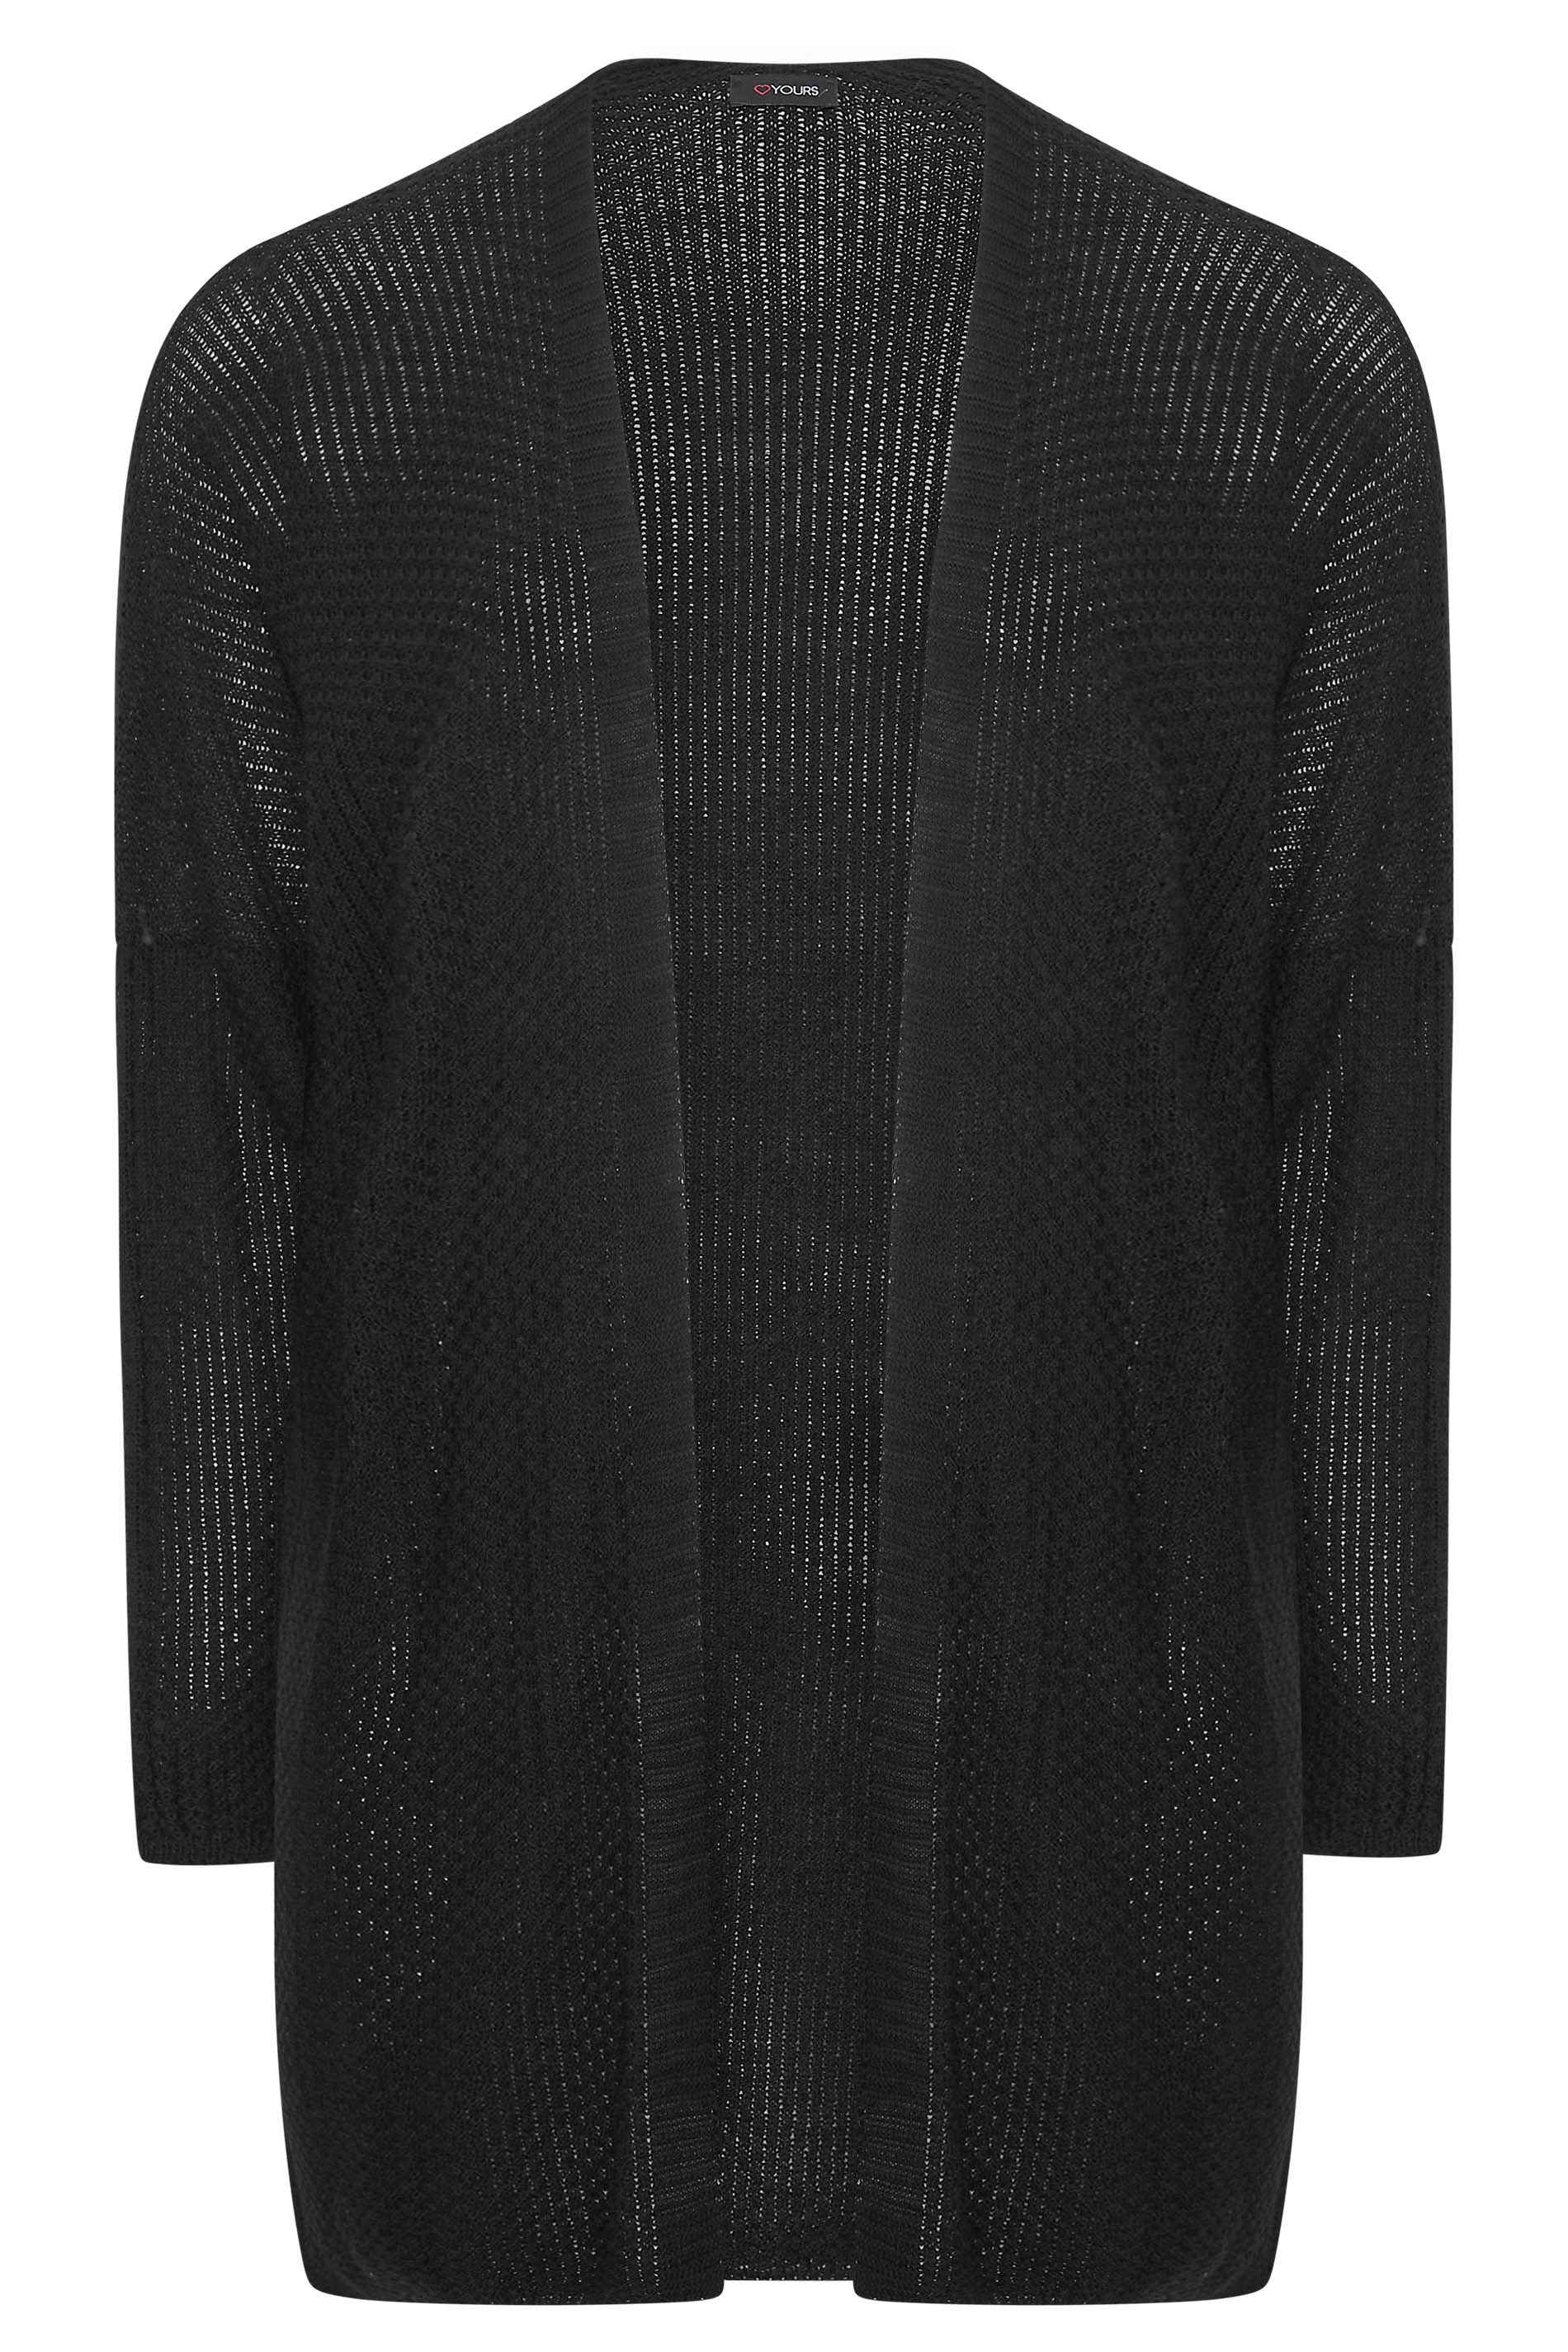 Plus Size Black Clothing Ribbed Cardigan | Yours